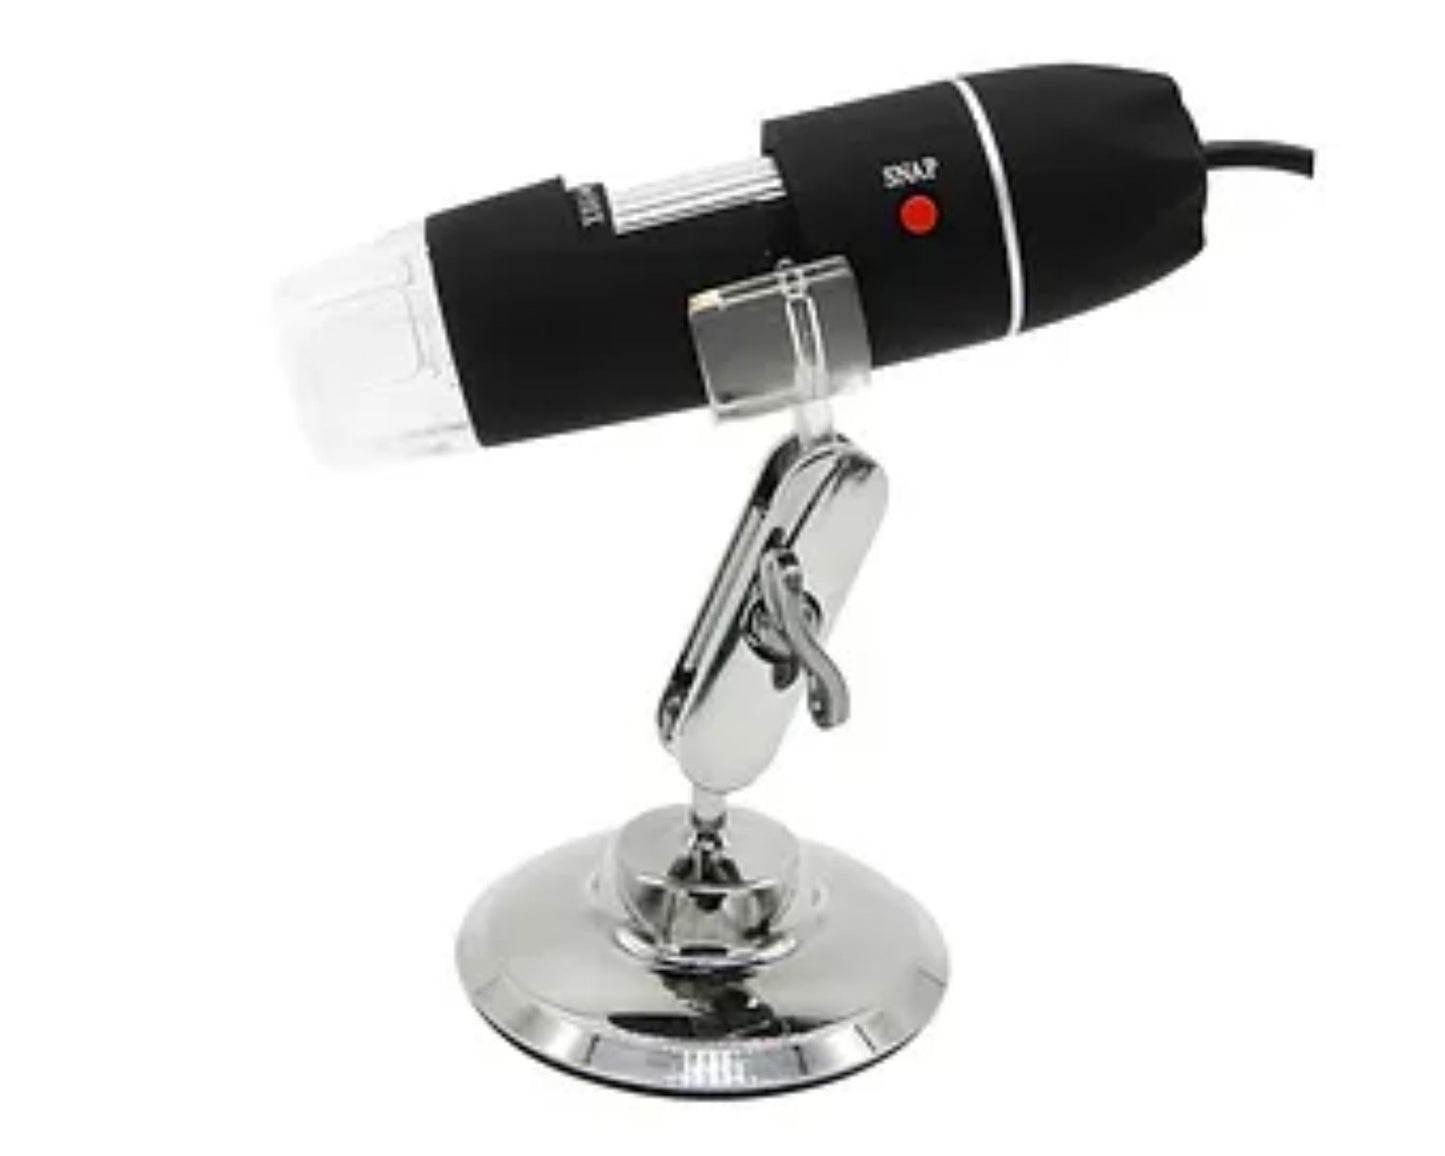 Microscope usb x50 - x500